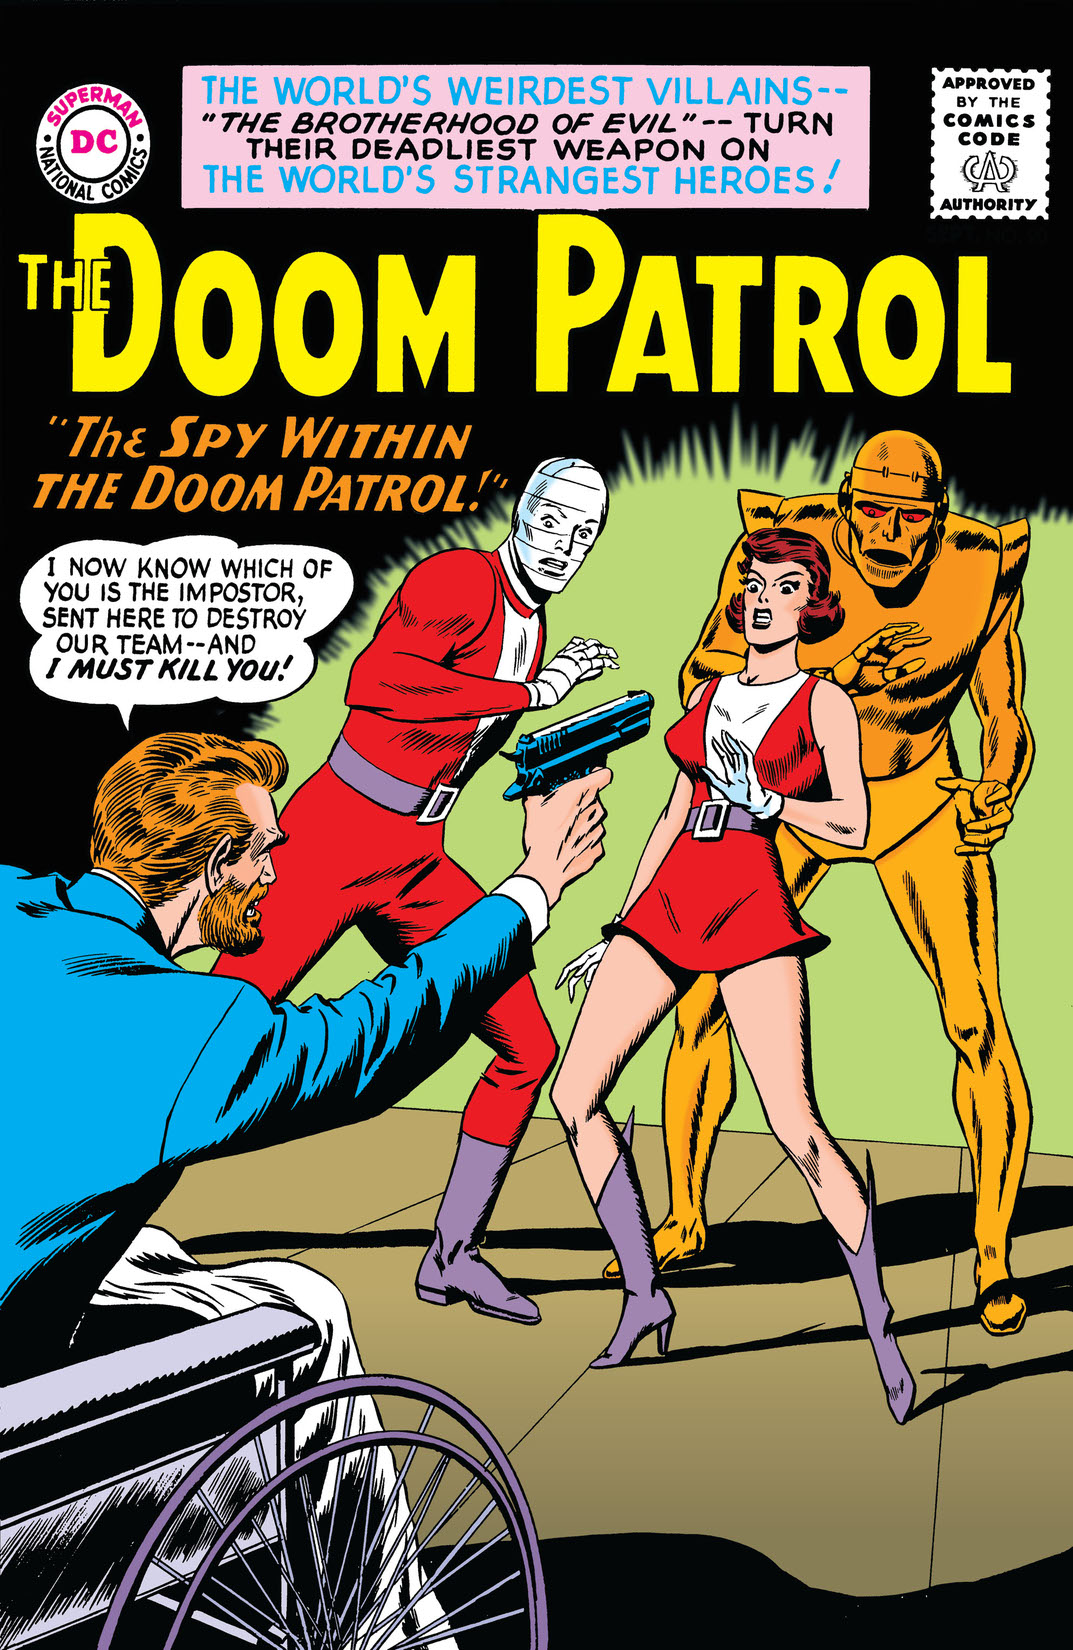 Doom Patrol (1964-) #90 preview images